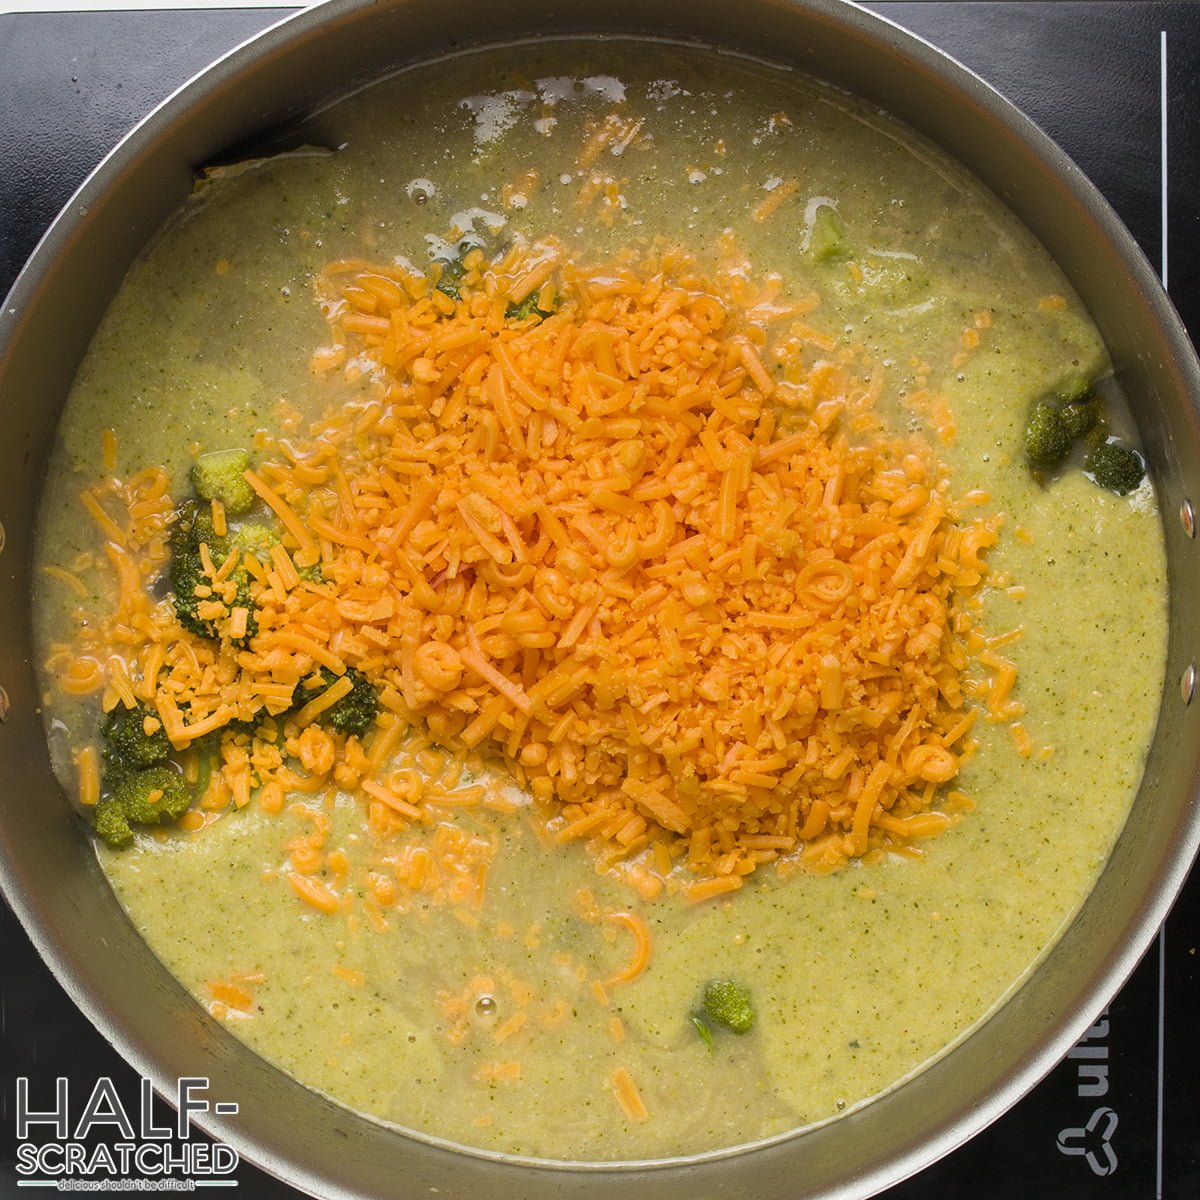 Adding cheddar to broccoli soup